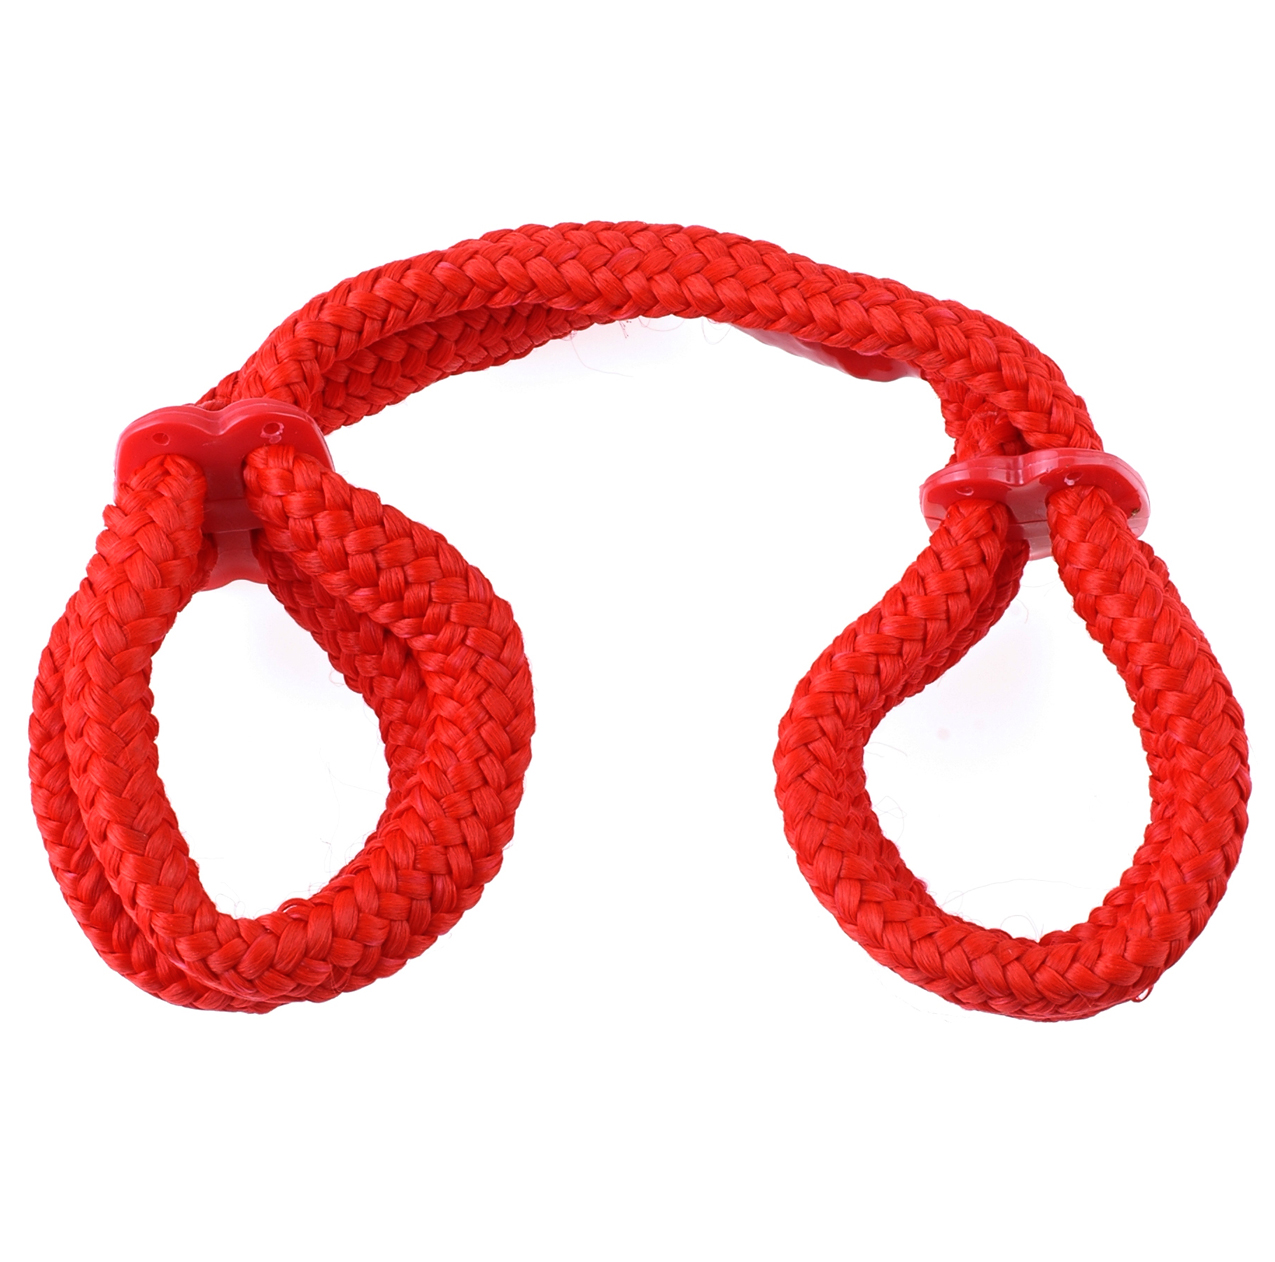   Silk Rope Love Cuffs